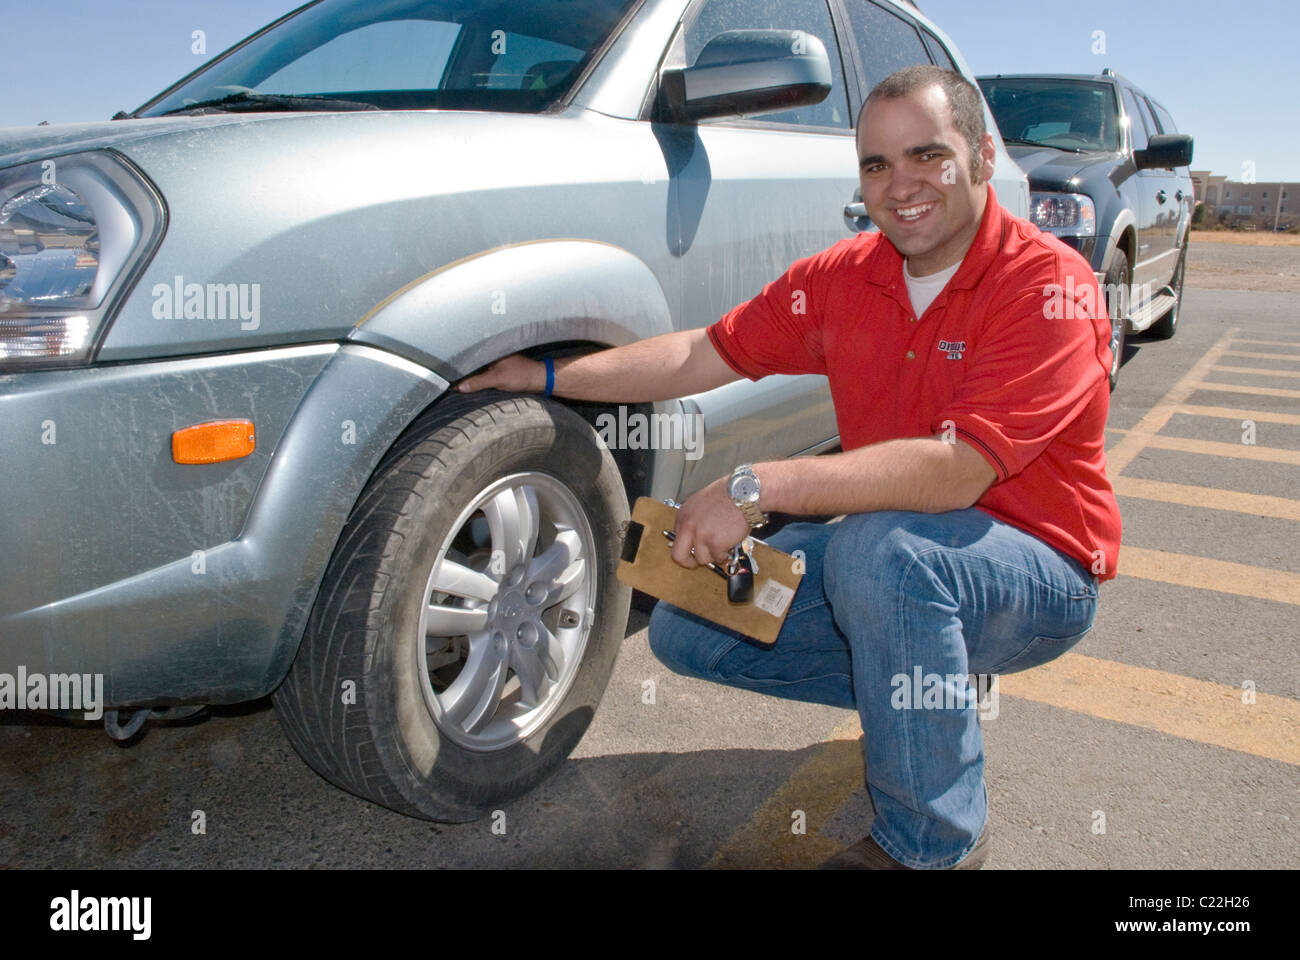 An employee at Discount Tire checks tread depth. Stock Photo